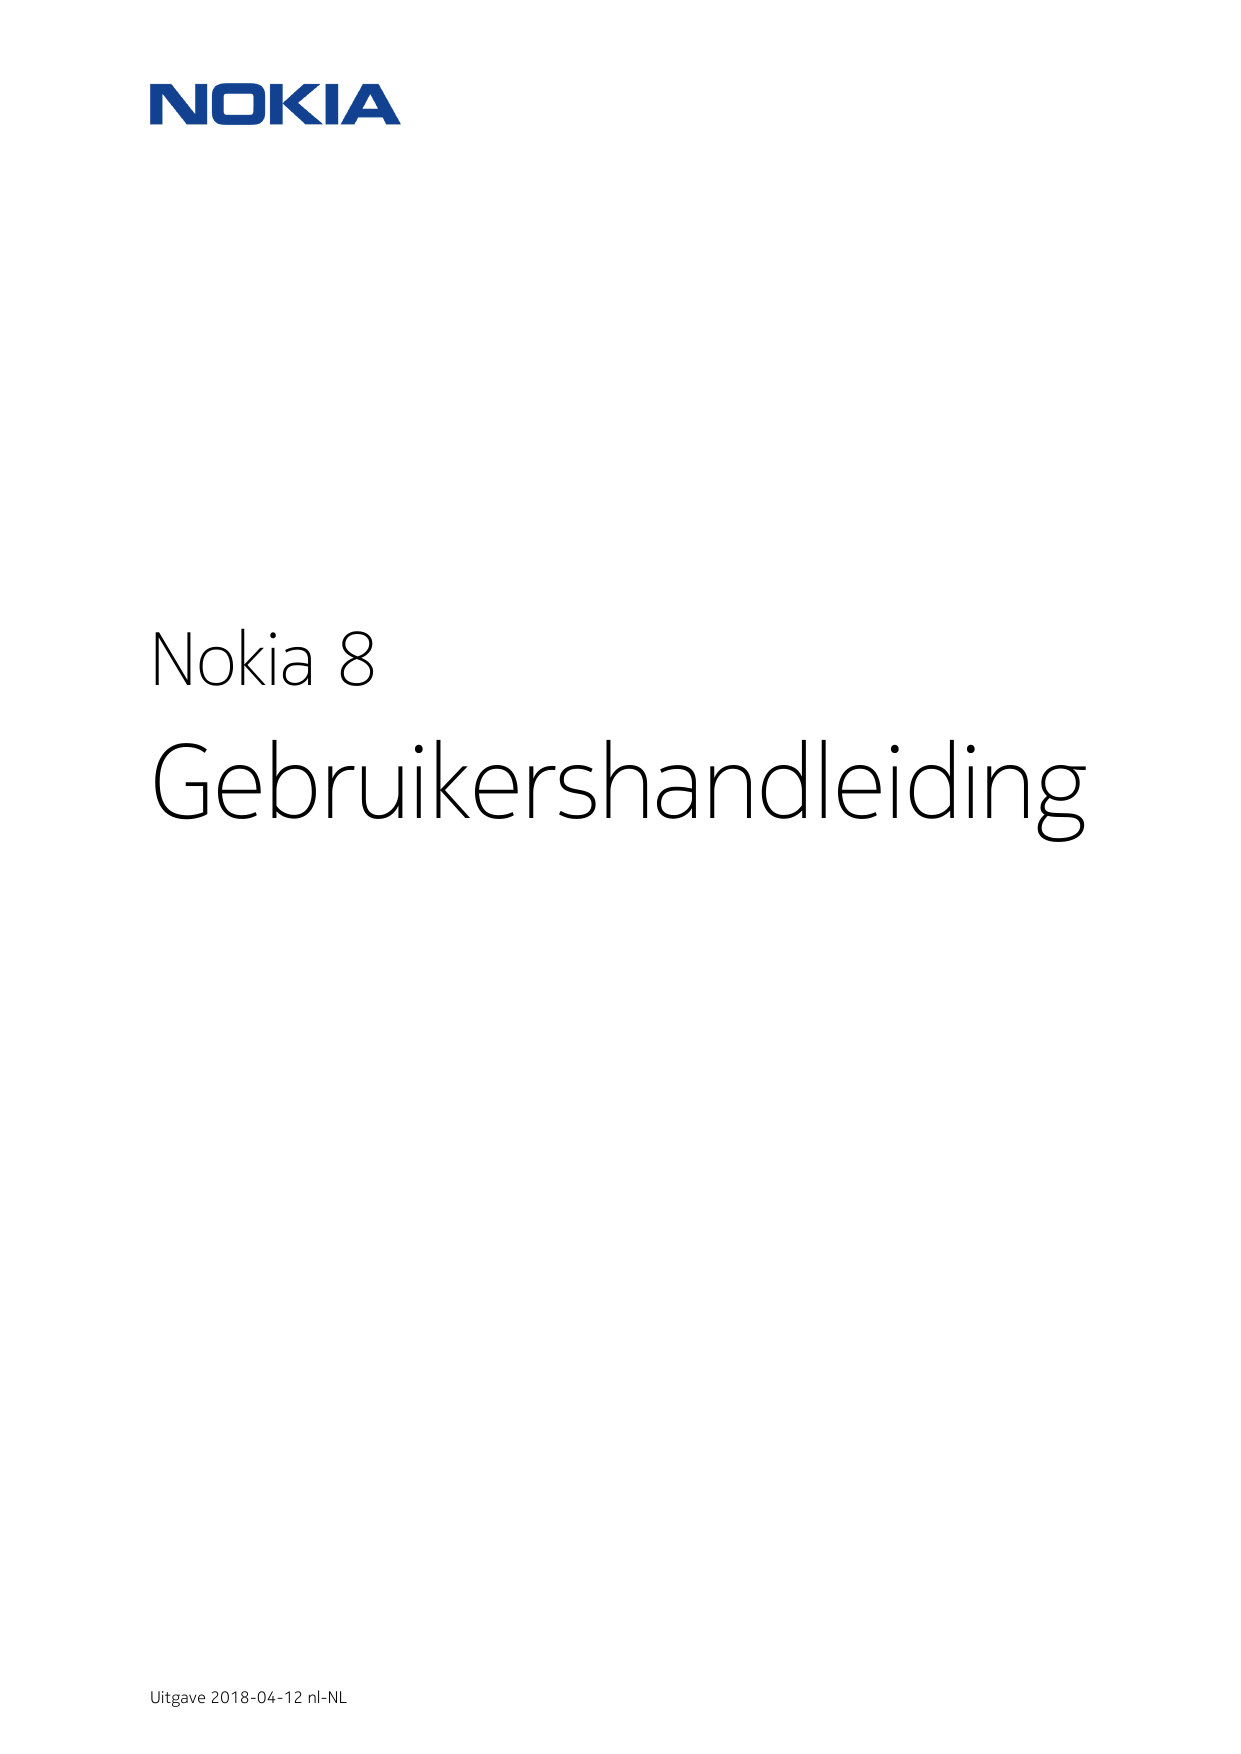 Nokia 8GebruikershandleidingUitgave 2018-04-12 nl-NL